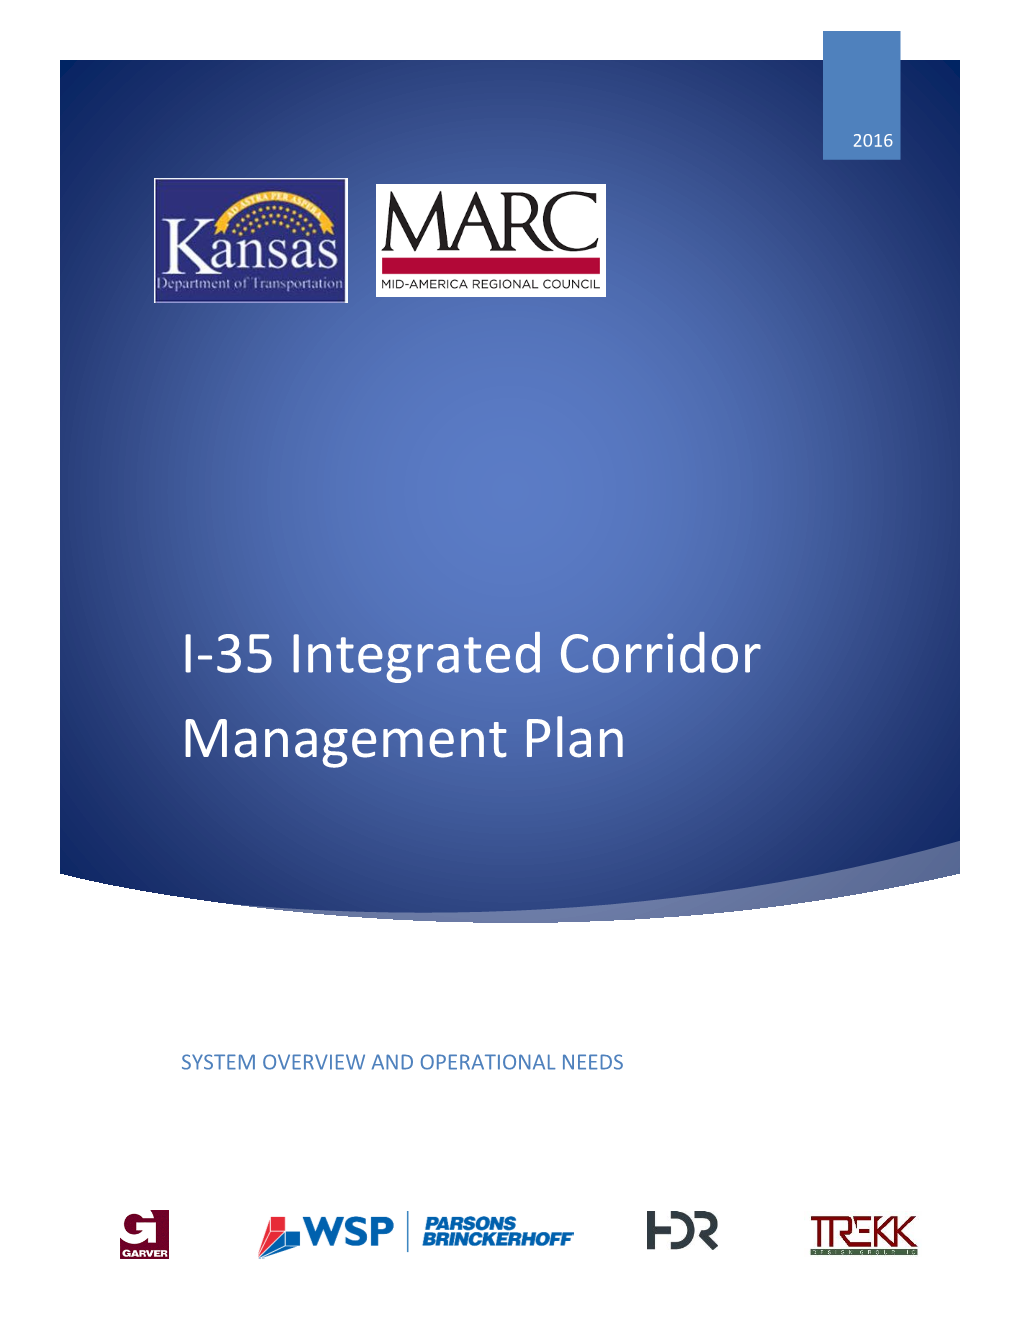 I-35 Integrated Corridor Management Plan